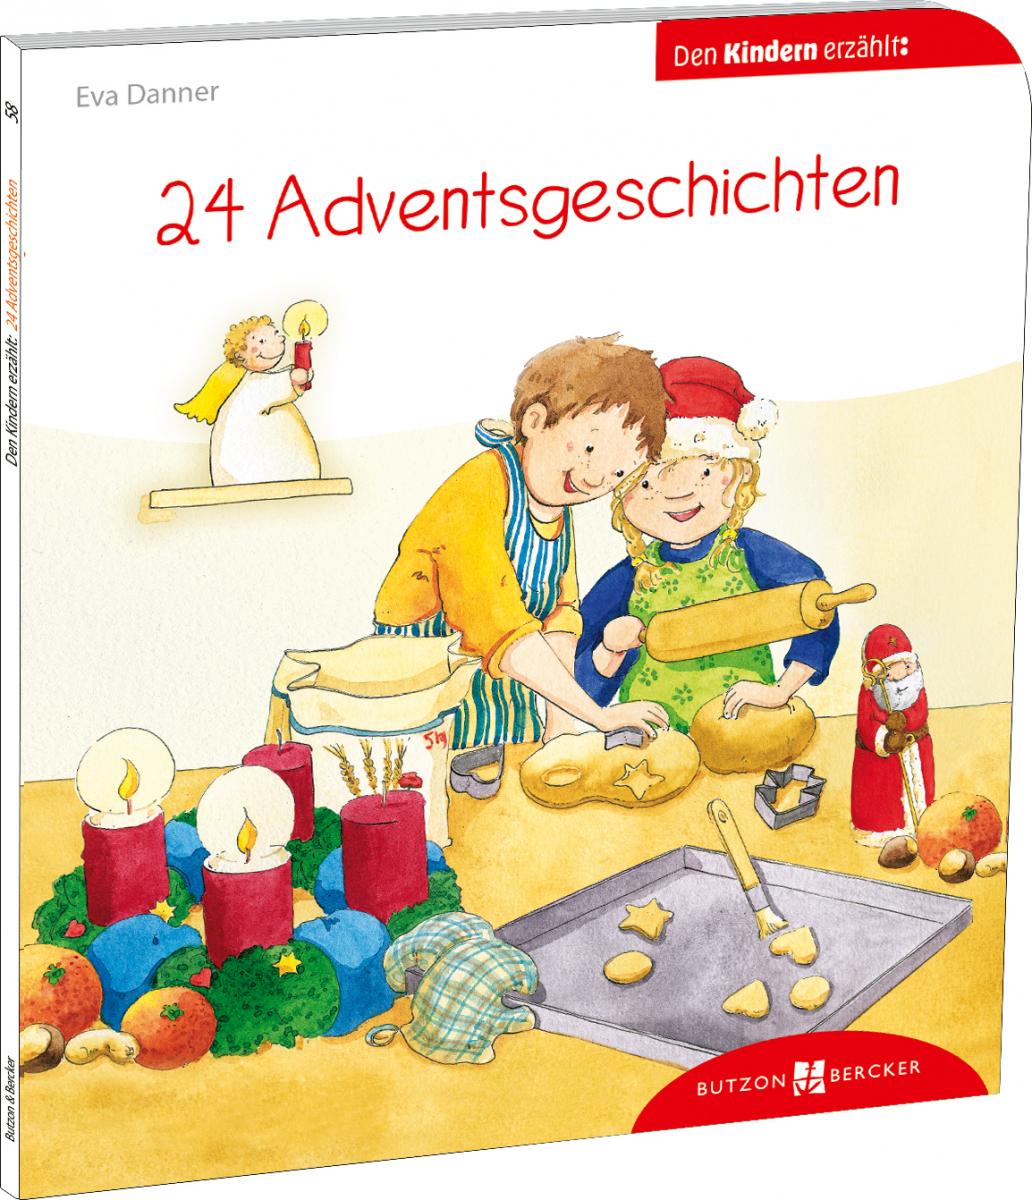 Kinderbuch zum Advent - 24 Adventsgeschichten den Kindern erzählt